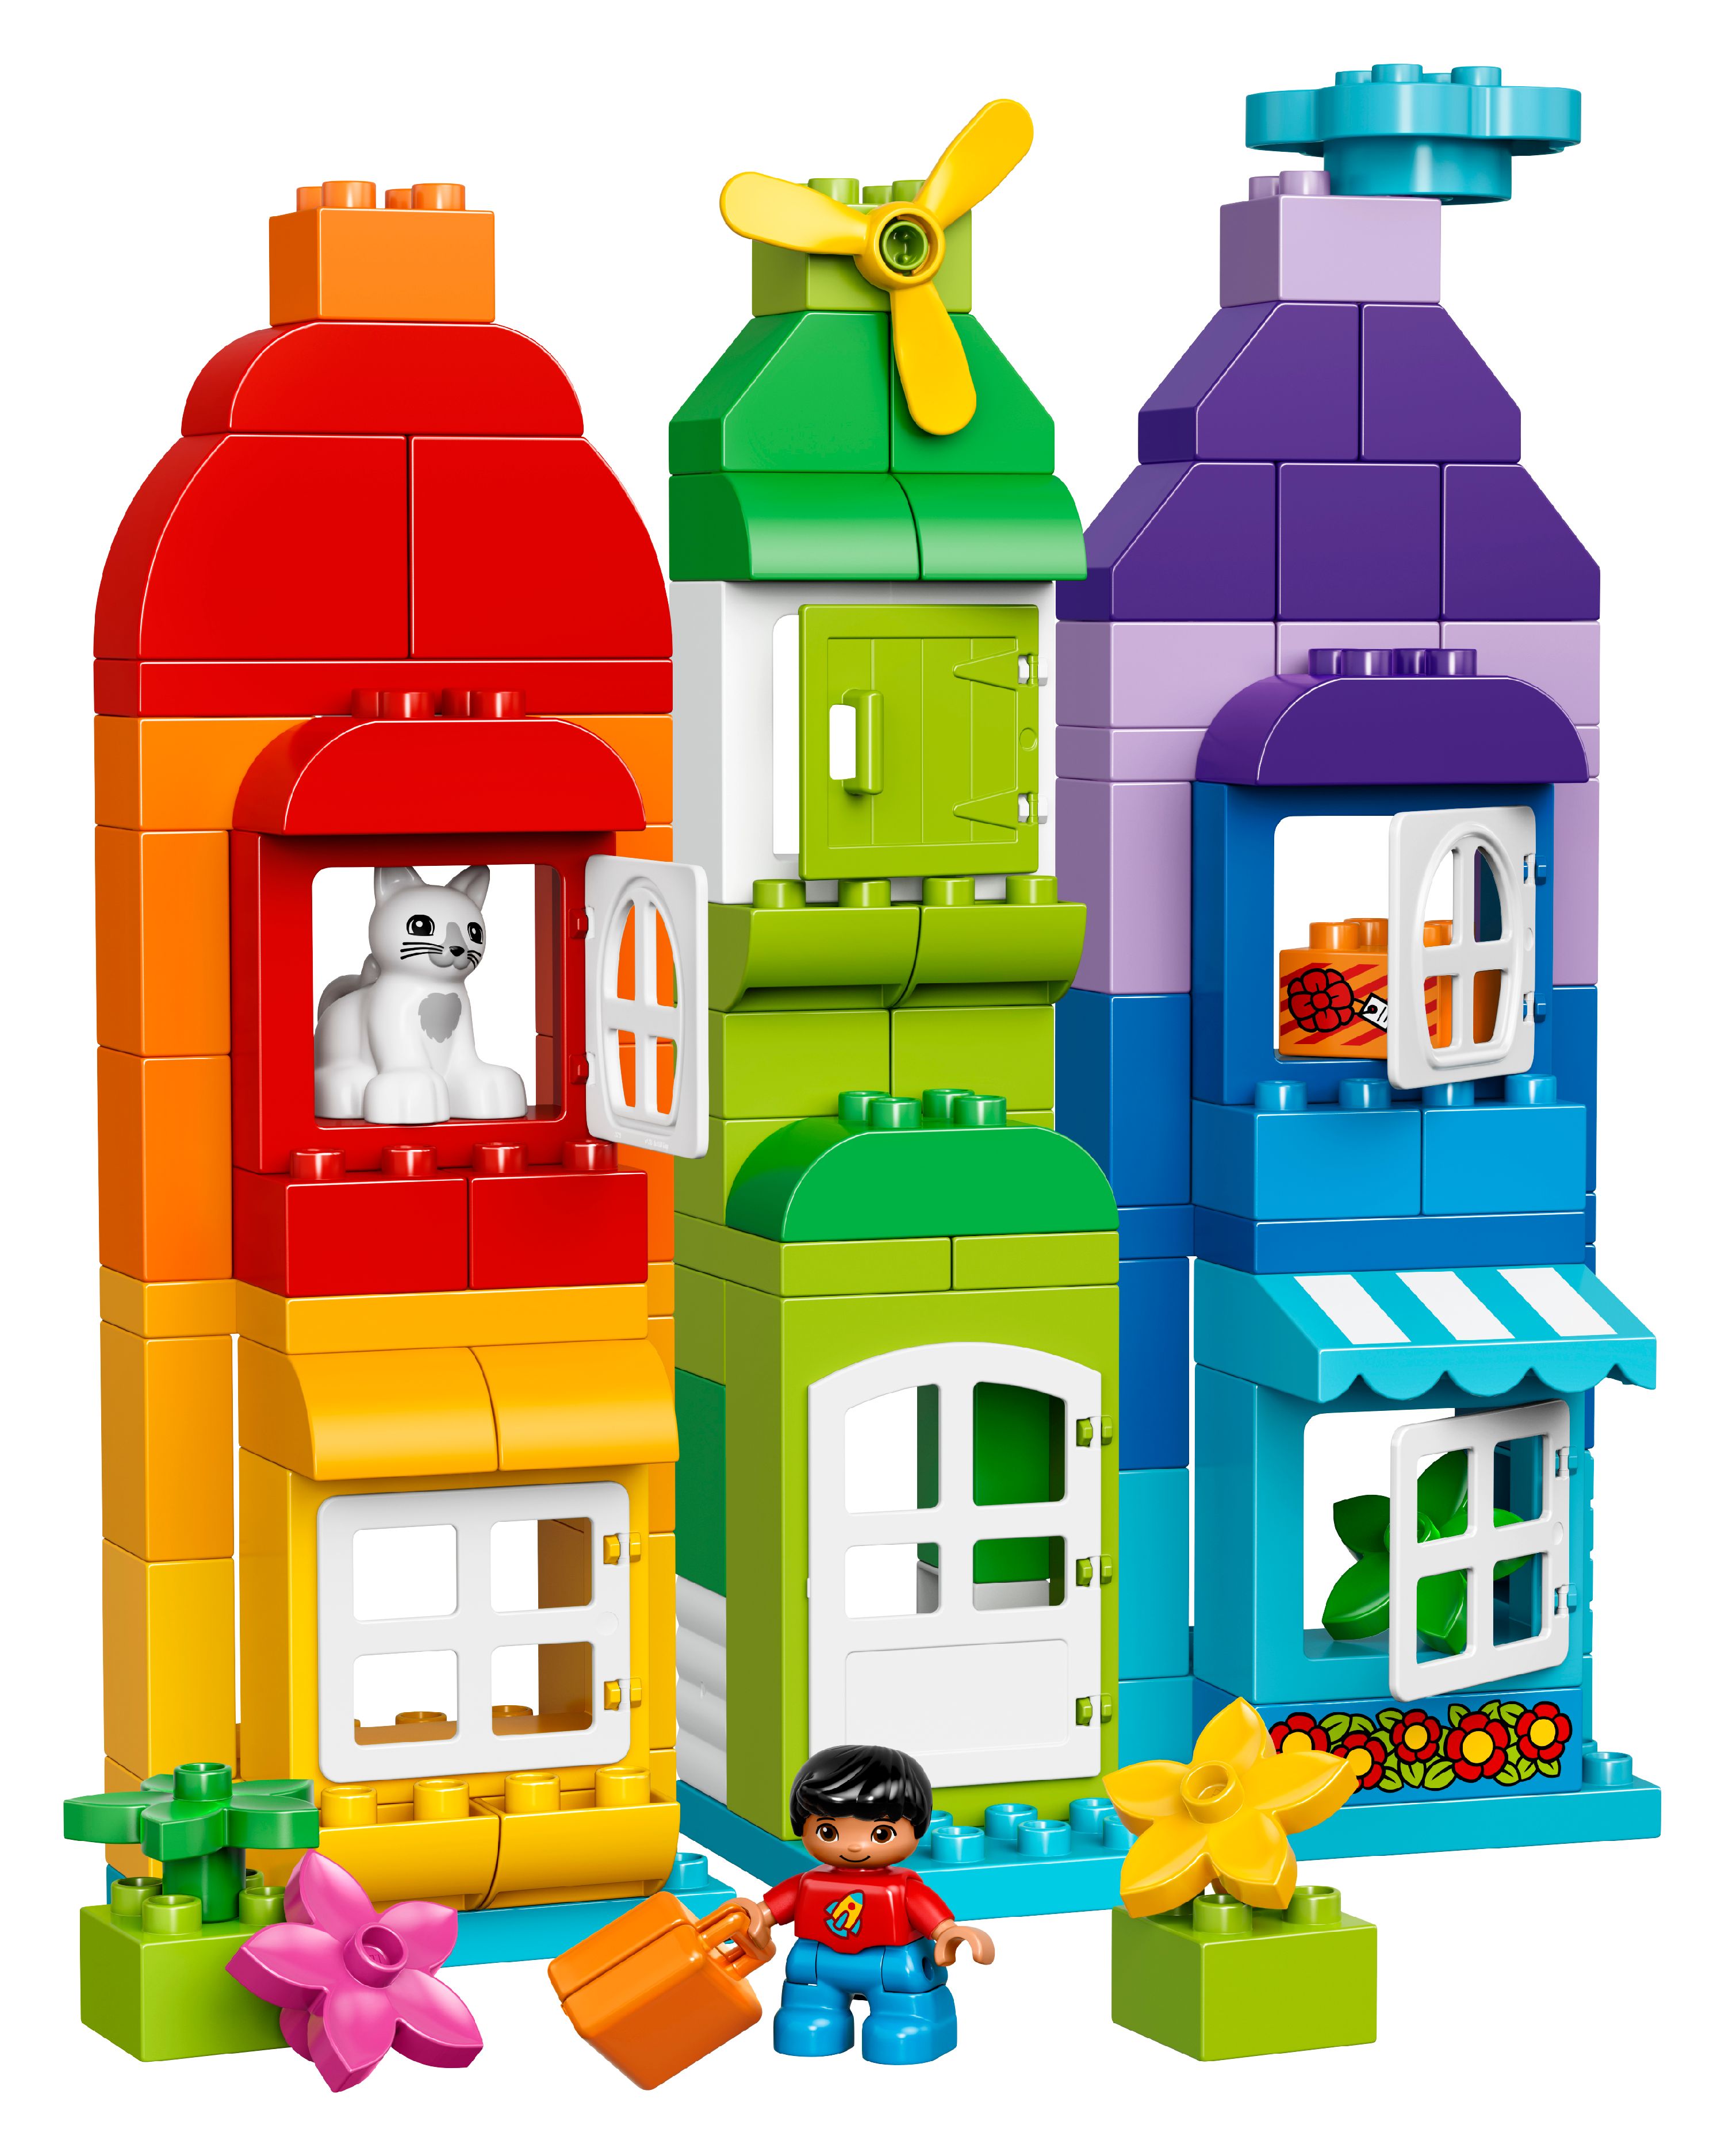 LEGO DUPLO Creative Box 10854 - image 4 of 6